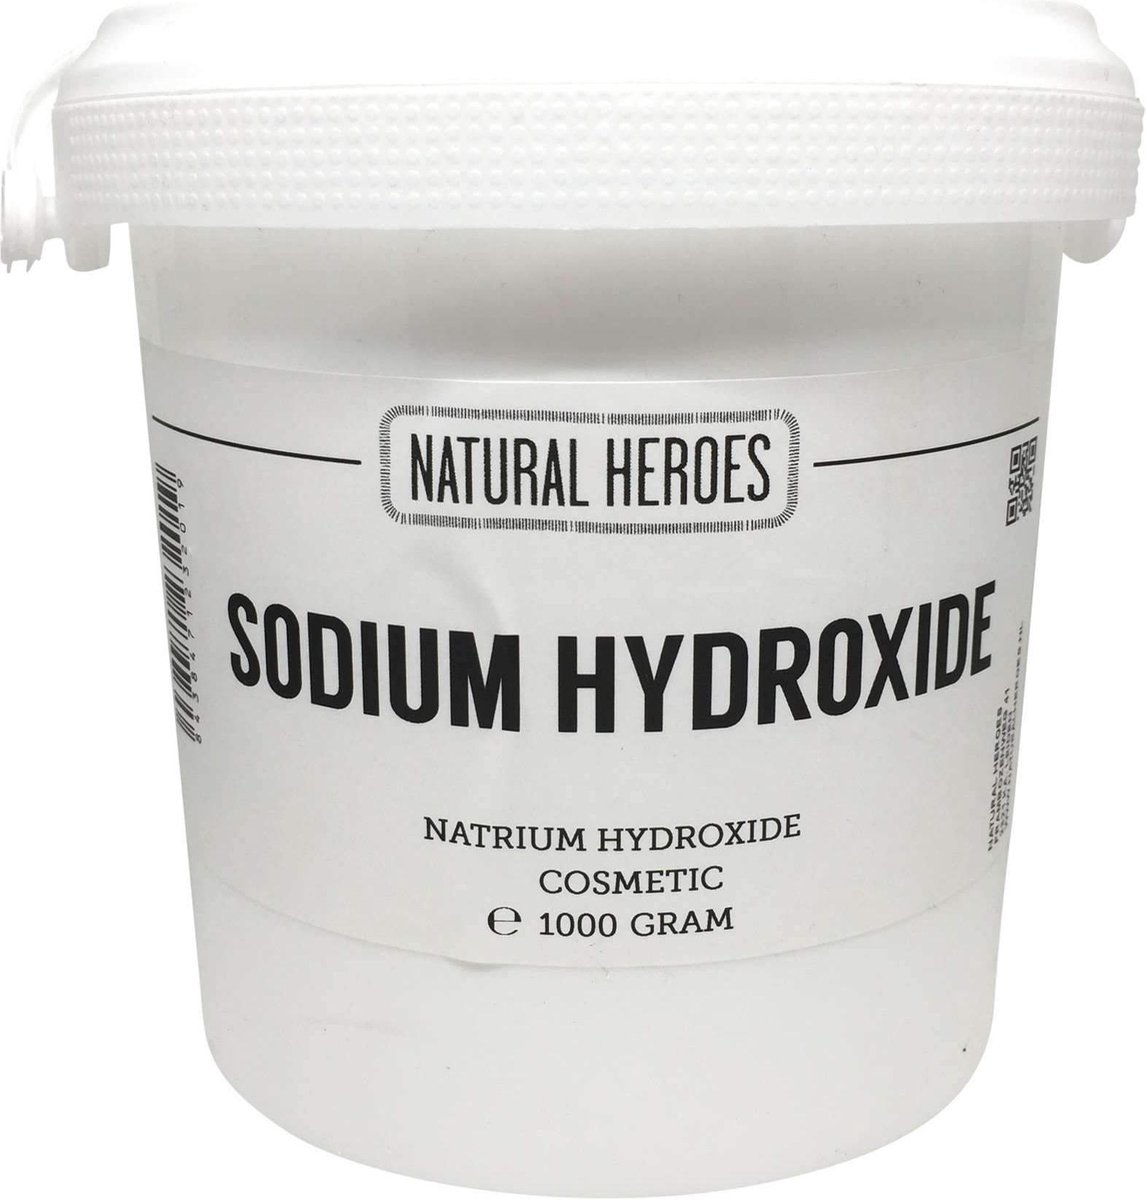 Natrium hydroxide